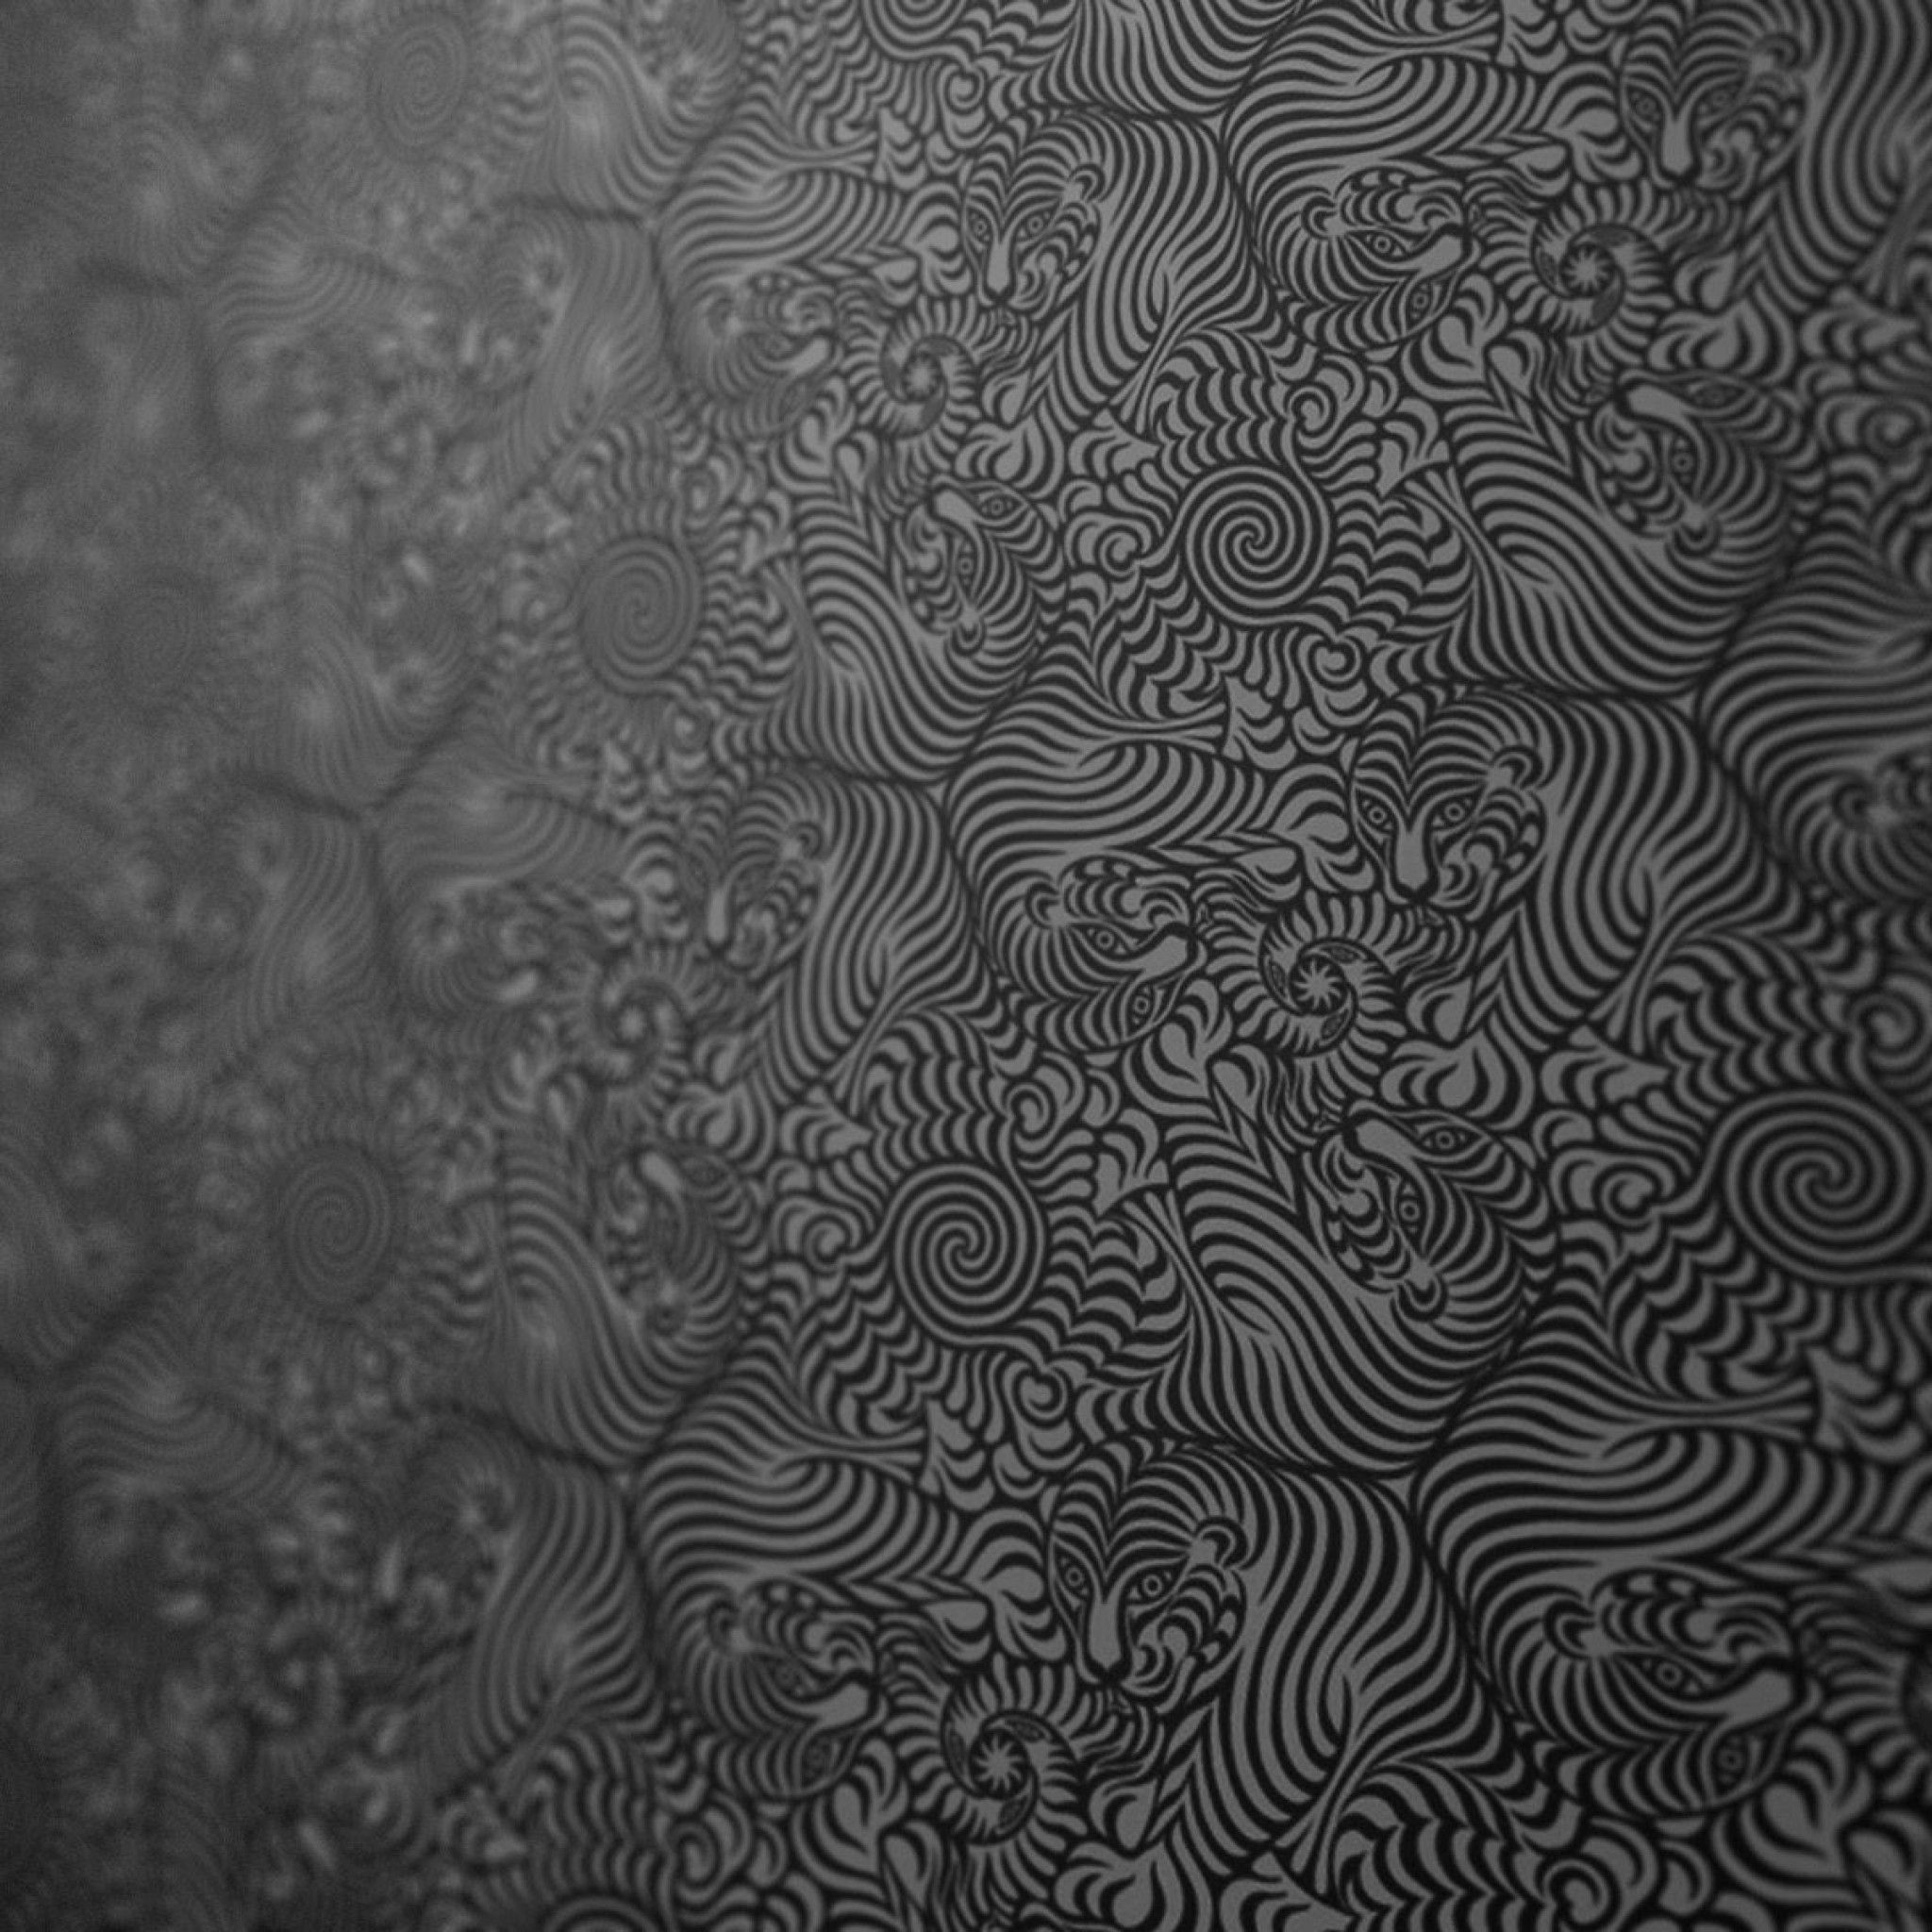 Texture Black White Patterns Tigers iPad Air Wallpaper Download ...